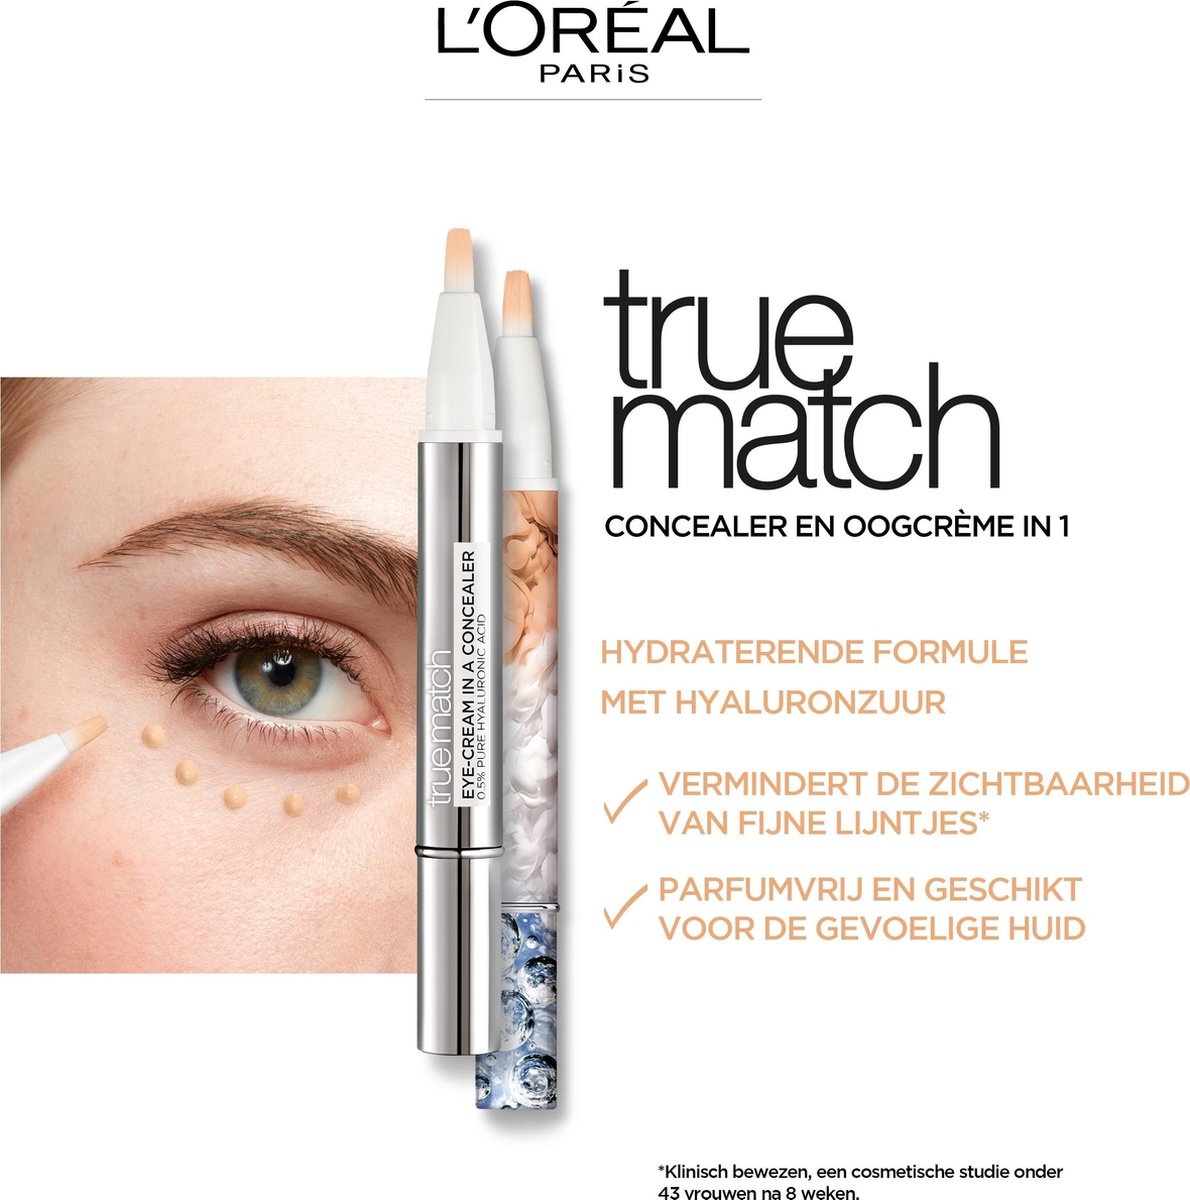 L’Oréal Paris True Match Touche Magique Concealer - N3-5 Natural Beige - Concealer en Oogcrème in 1, Verrijkt met 0,5% Hyaluronzuur